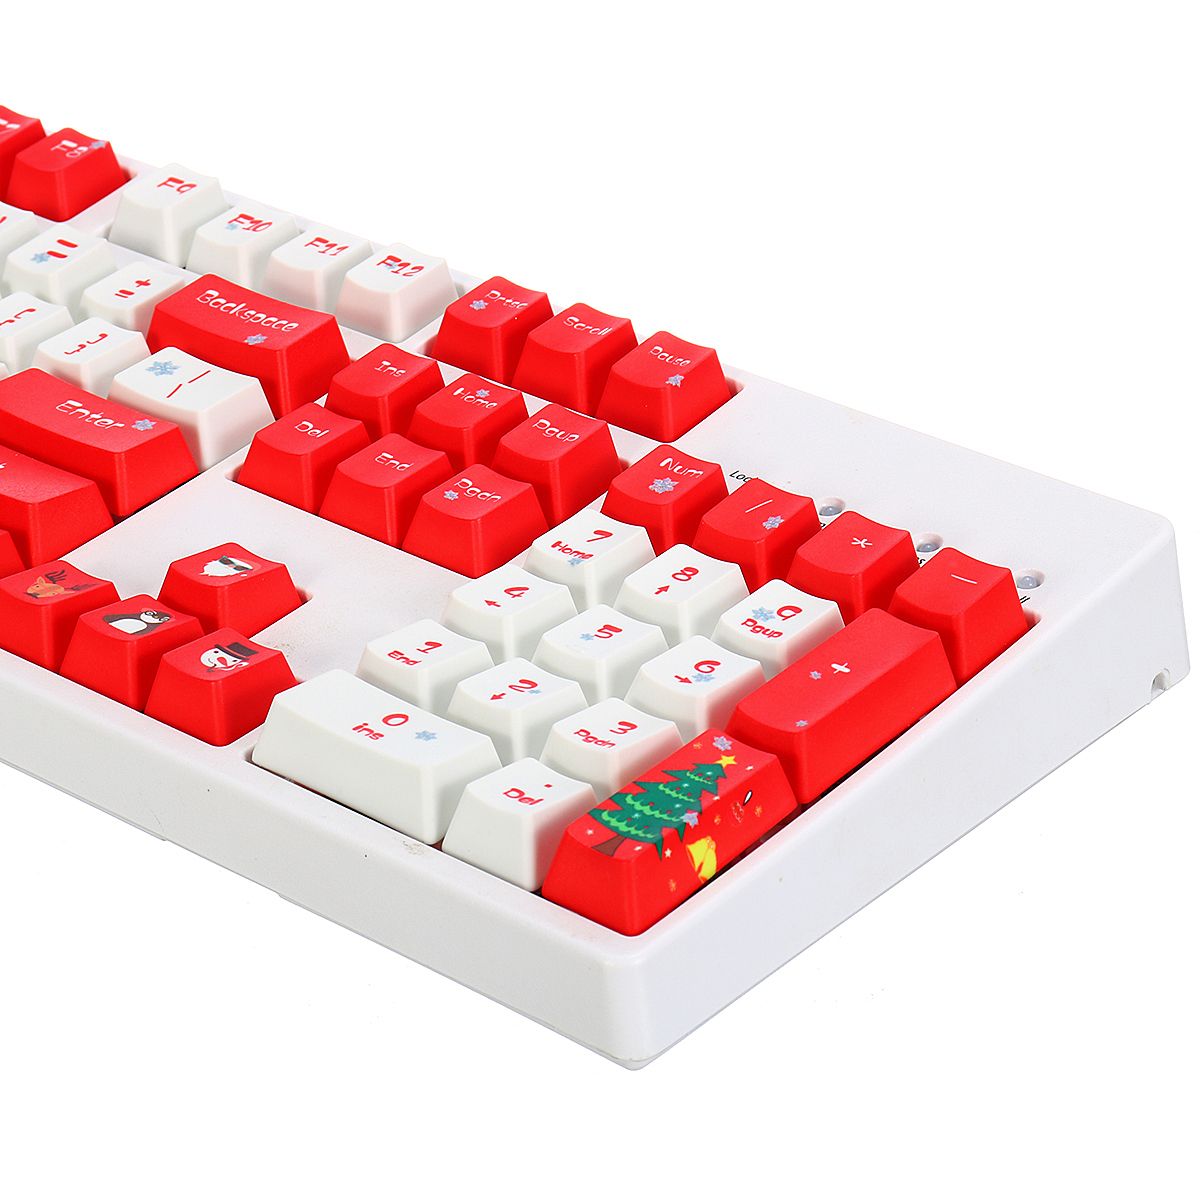 108-Keys-Christmas-Keycap-Set-OEM-Profile-PBT-Dye-Sublimation-Keycaps-for-Mechanical-Keyboard-1737526